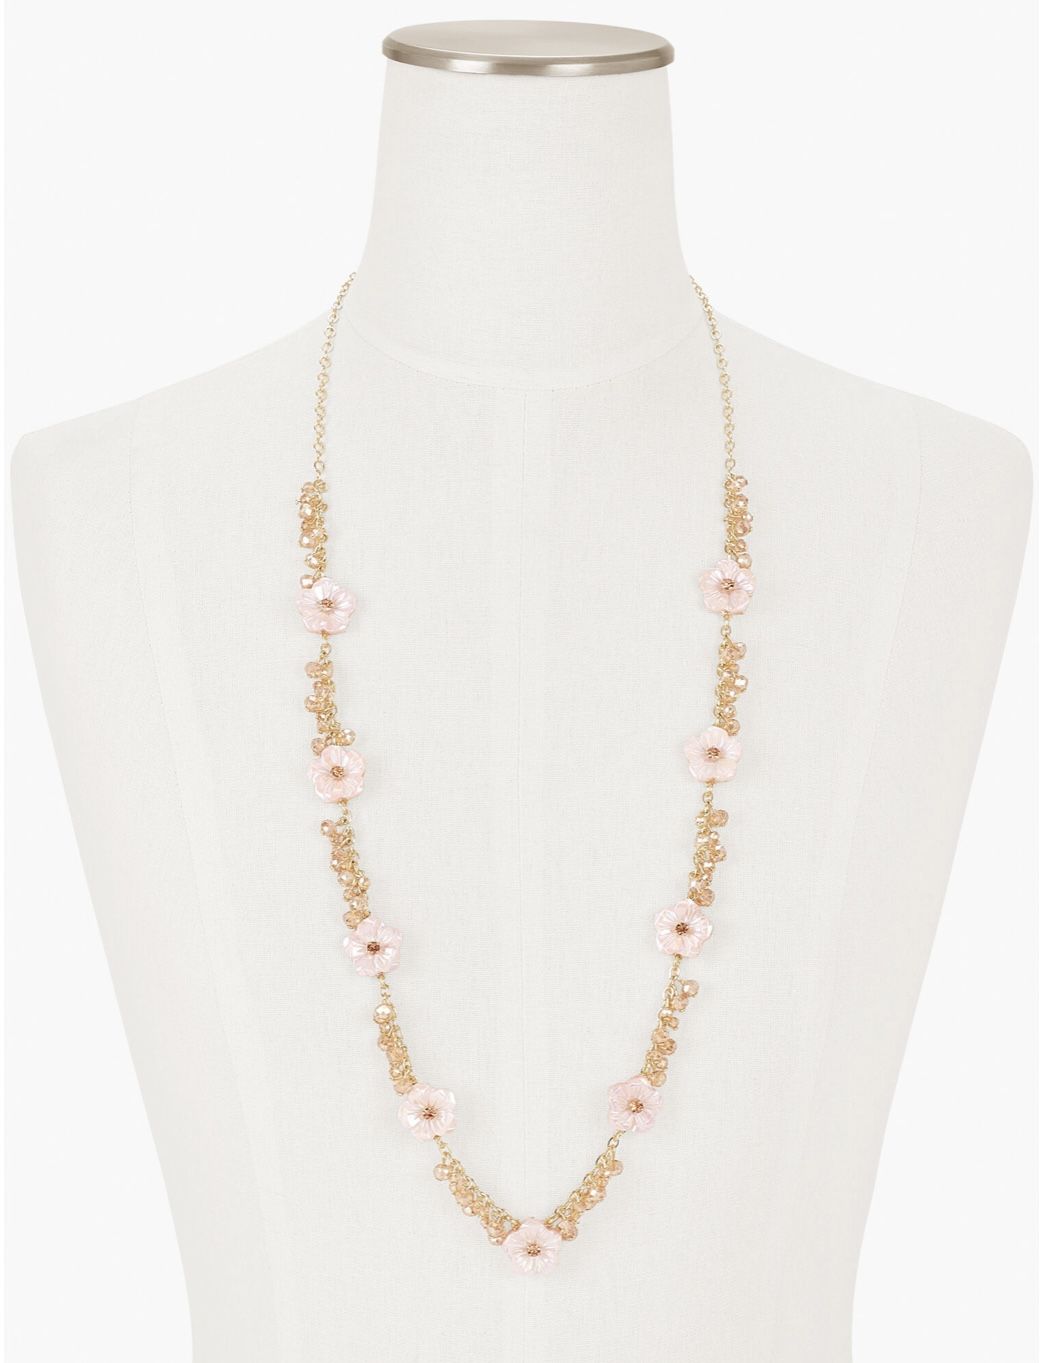 Talbots Blush Pink/Gold Long Necklace $25 Obo